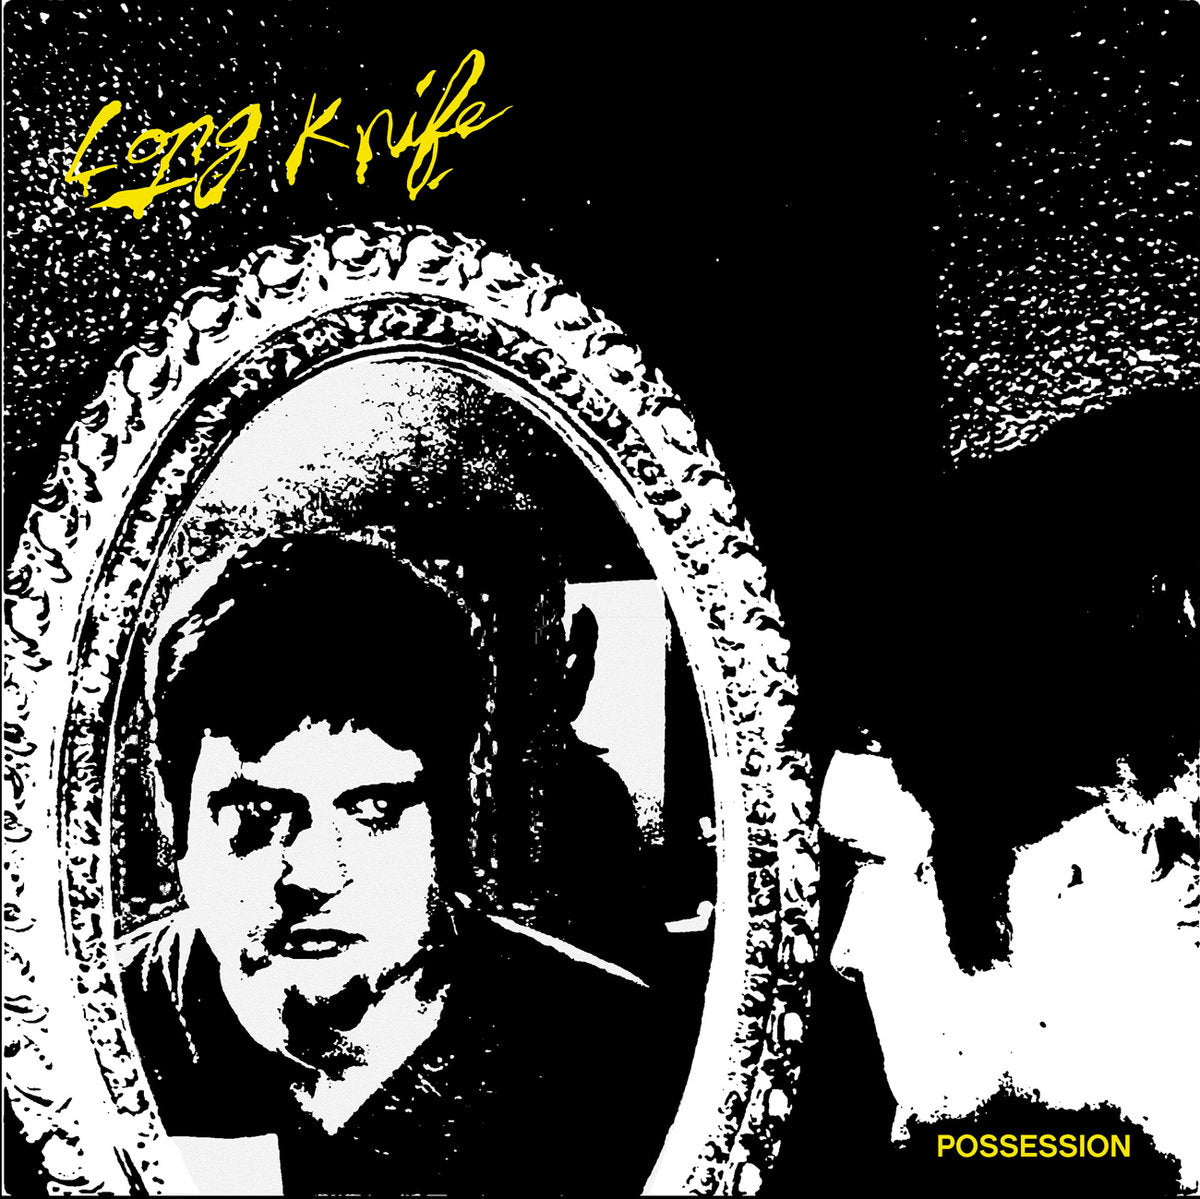 Long Knife - Possession 7" - Vinyl - Taken By Surprise